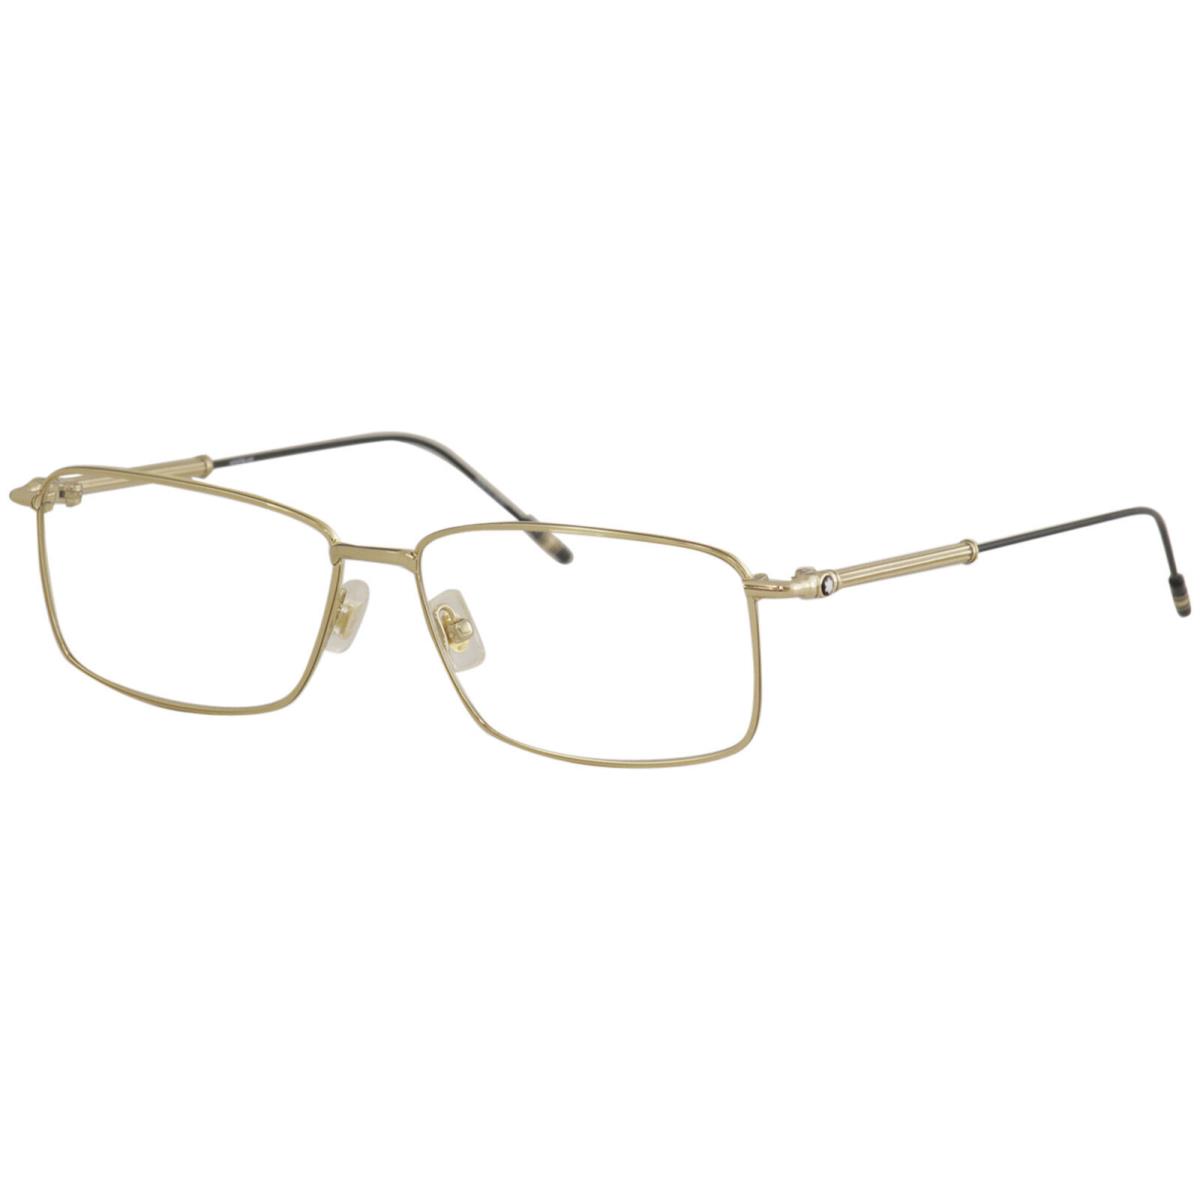 Montblanc Eyeglasses MB0039O 002 Gold Full Rim Frames 58MM Rx-able